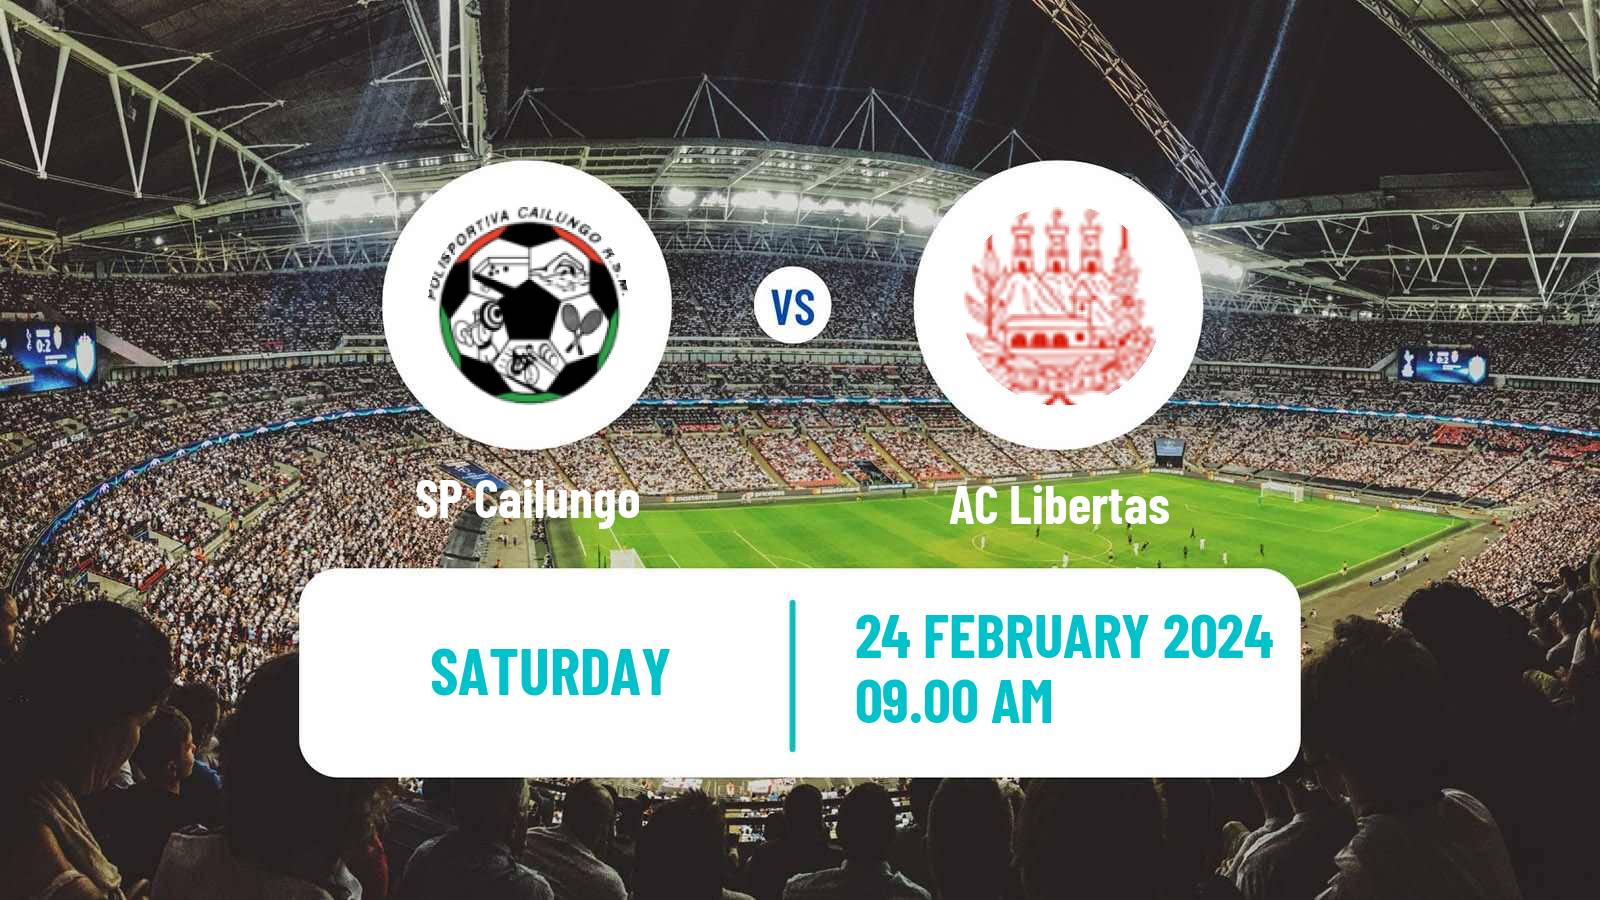 Soccer San Marino Campionato Sammarinese Cailungo - AC Libertas